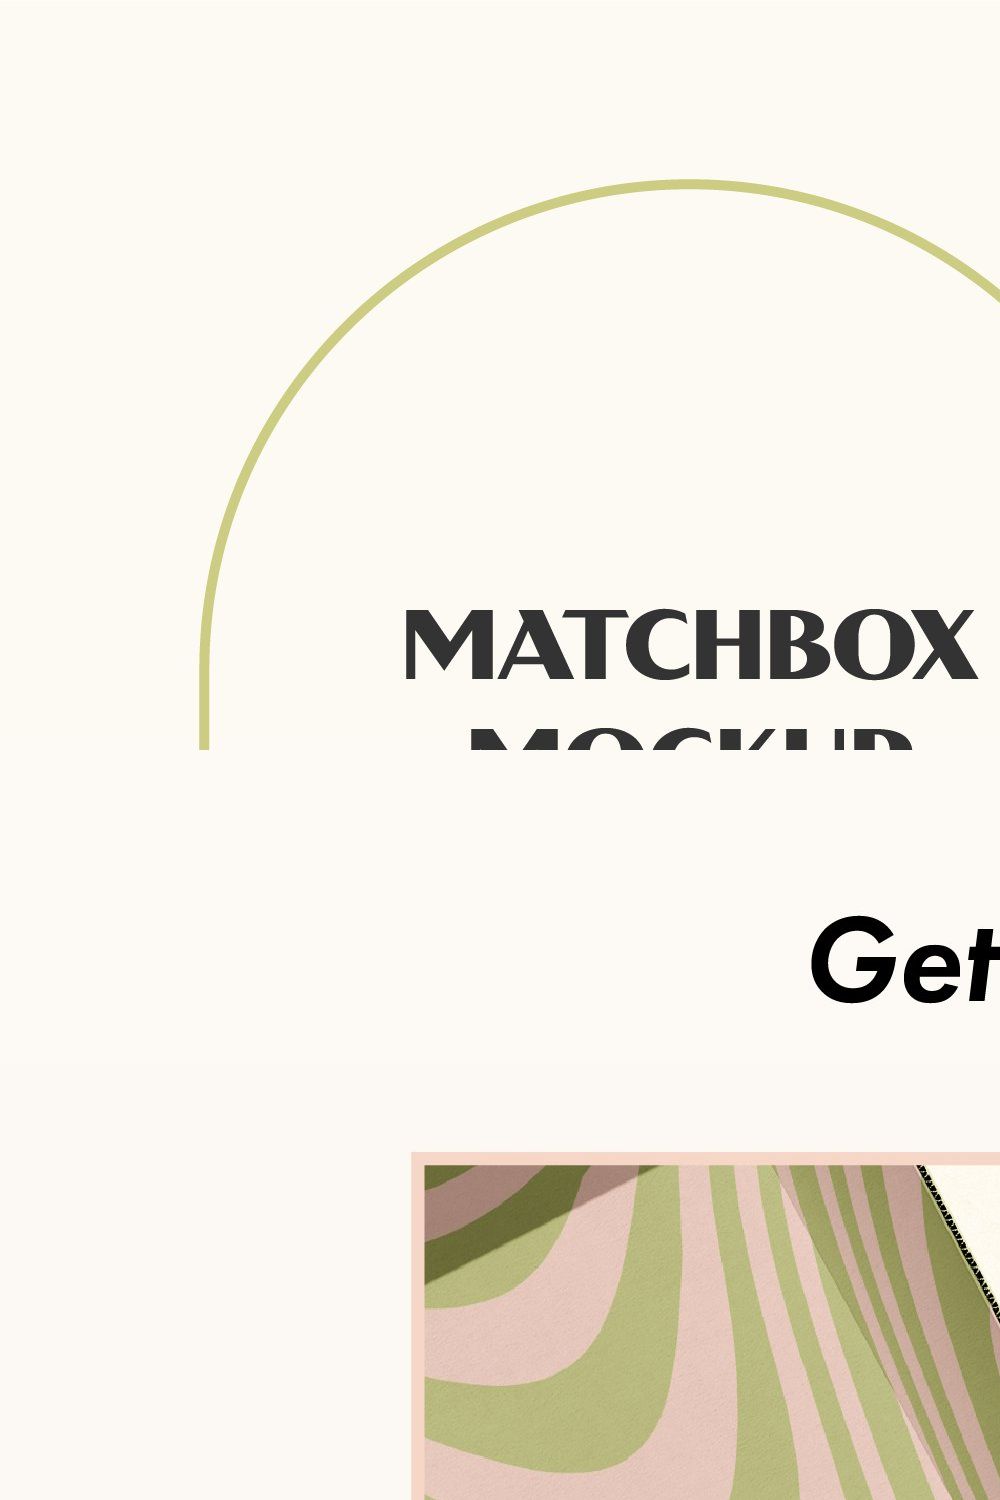 Matchbox Mockup pinterest preview image.